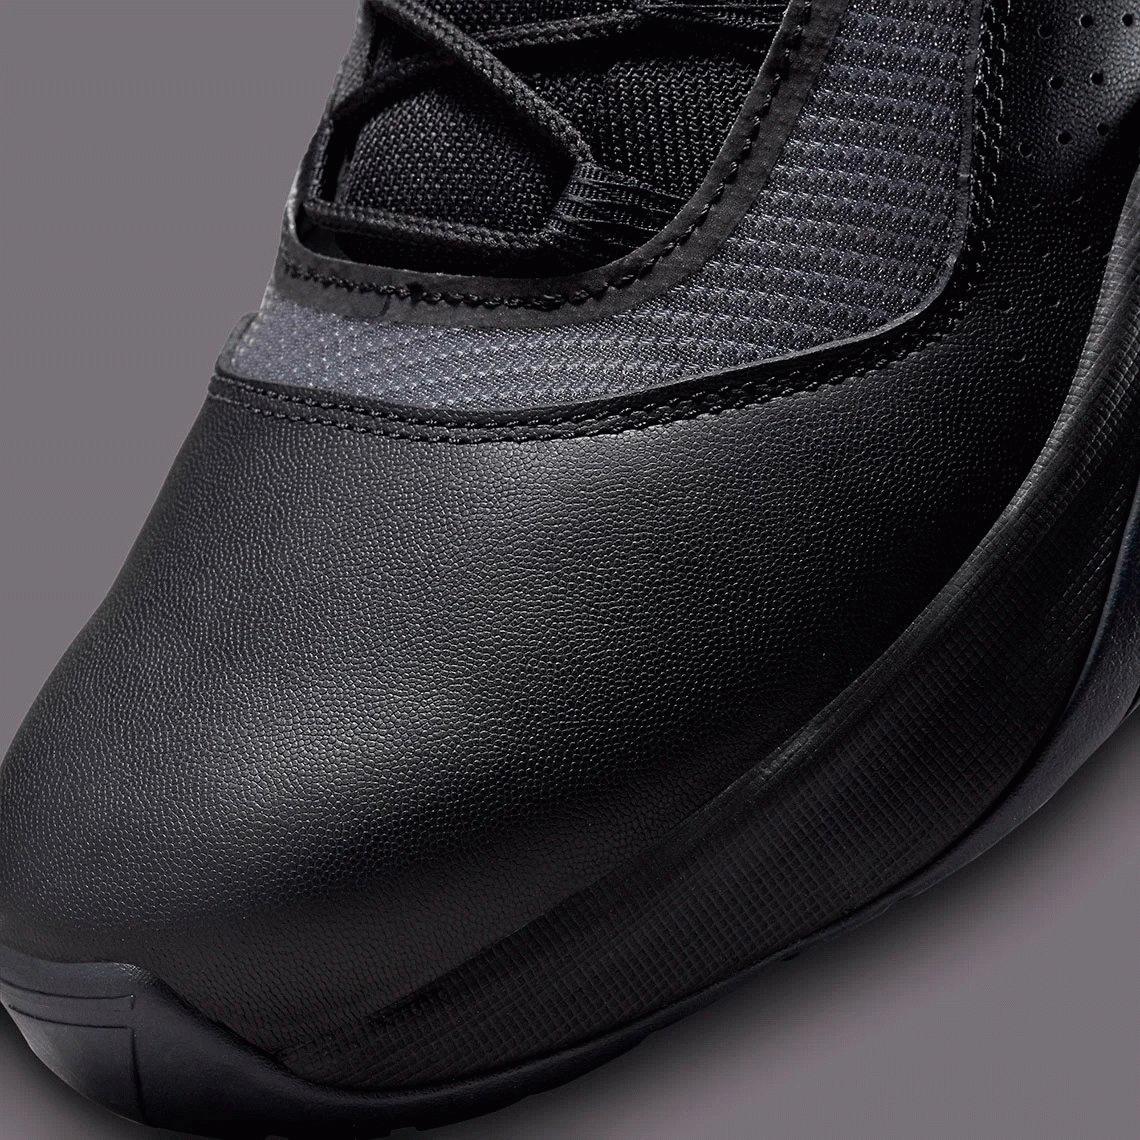 Triple Black Color Appears on The Air Jordan 11 CMFT Low